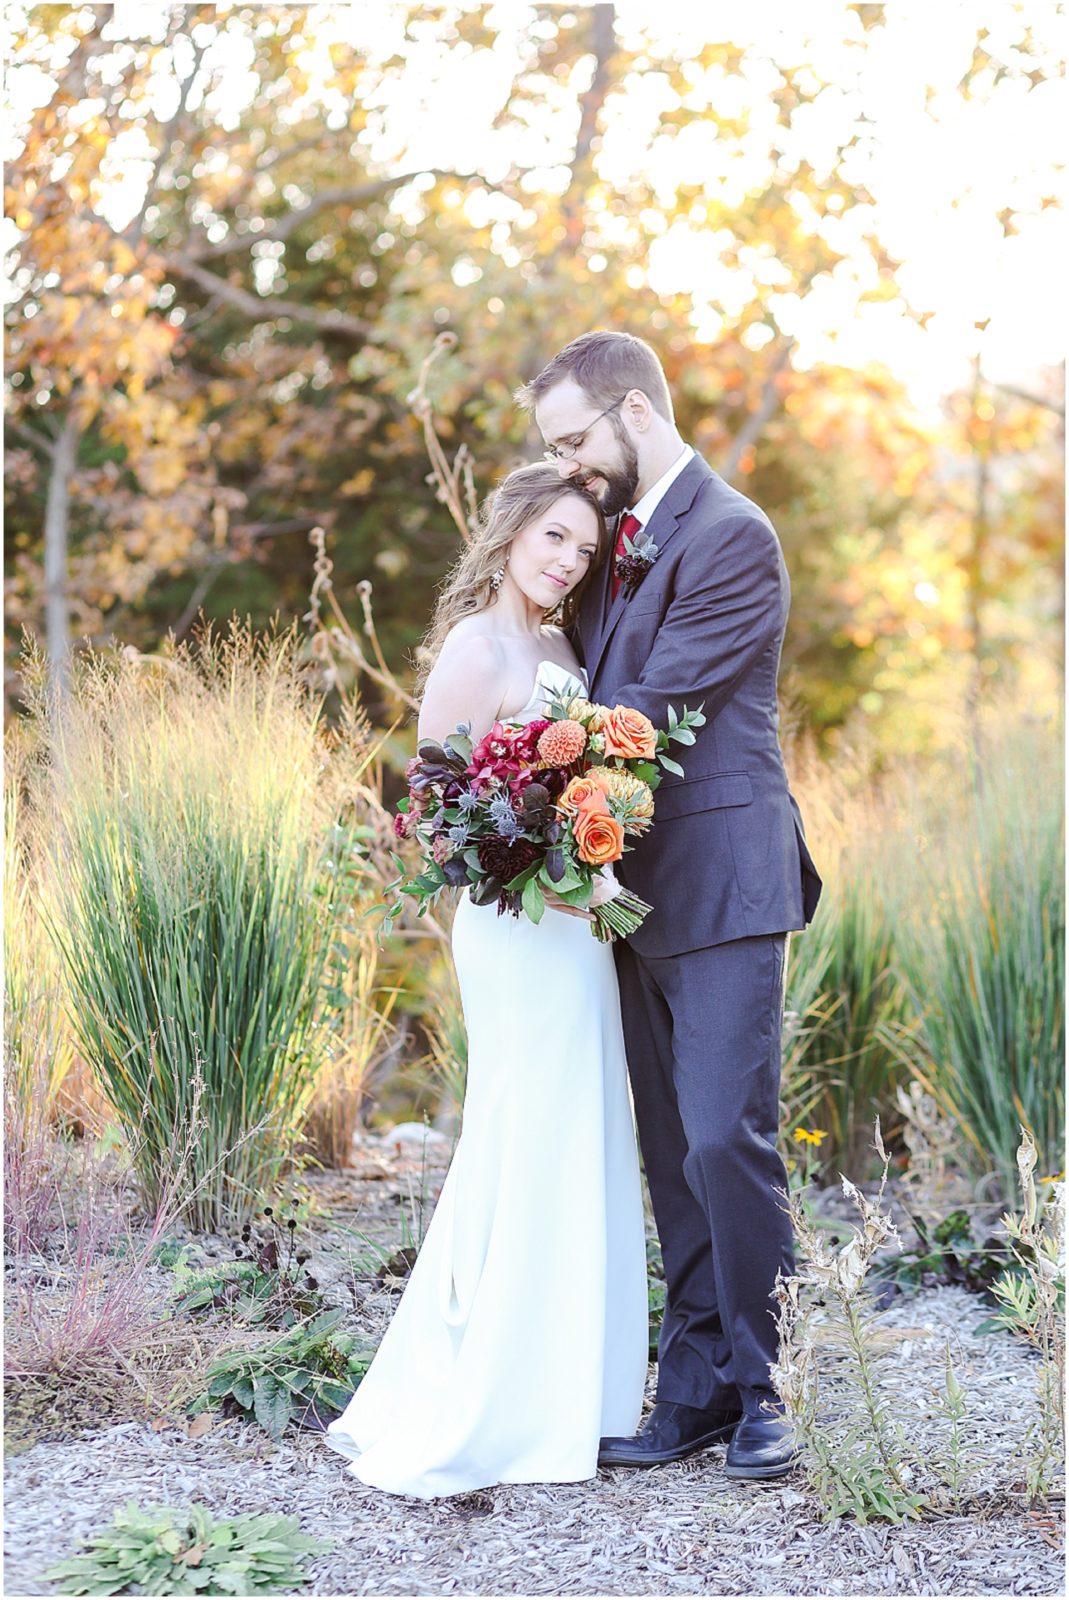 Stunning Fall Wedding Flowers | Wedding Theme for Fall | Fall Wedding Flowers | Mariam Saifan Photography | Kansas City Wedding Photographer